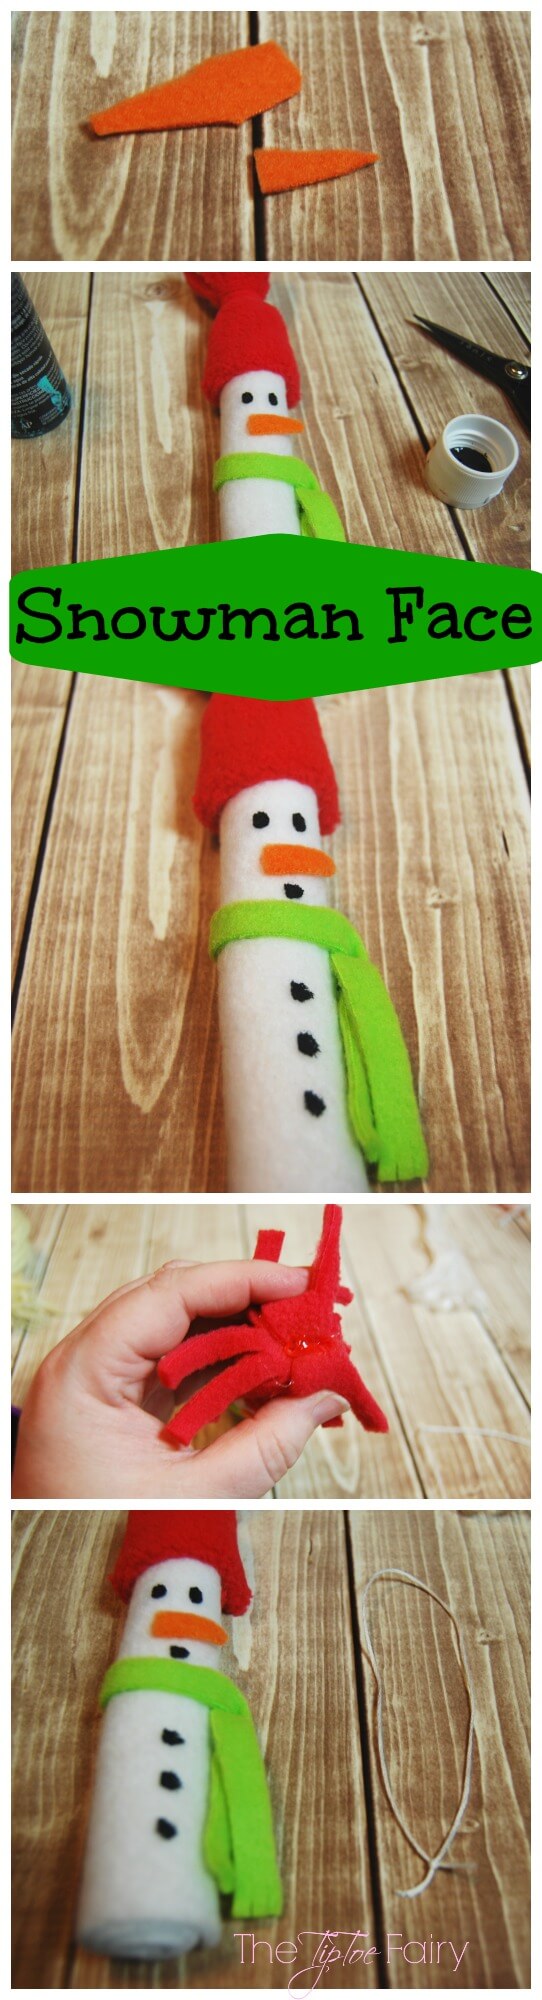 So Sew Easy Christmas in July Felt Ornaments - Easy Felt Snowman | The TipToe Fairy #christmasinjuly #christmasornaments #ornamenttutorials #tutorial